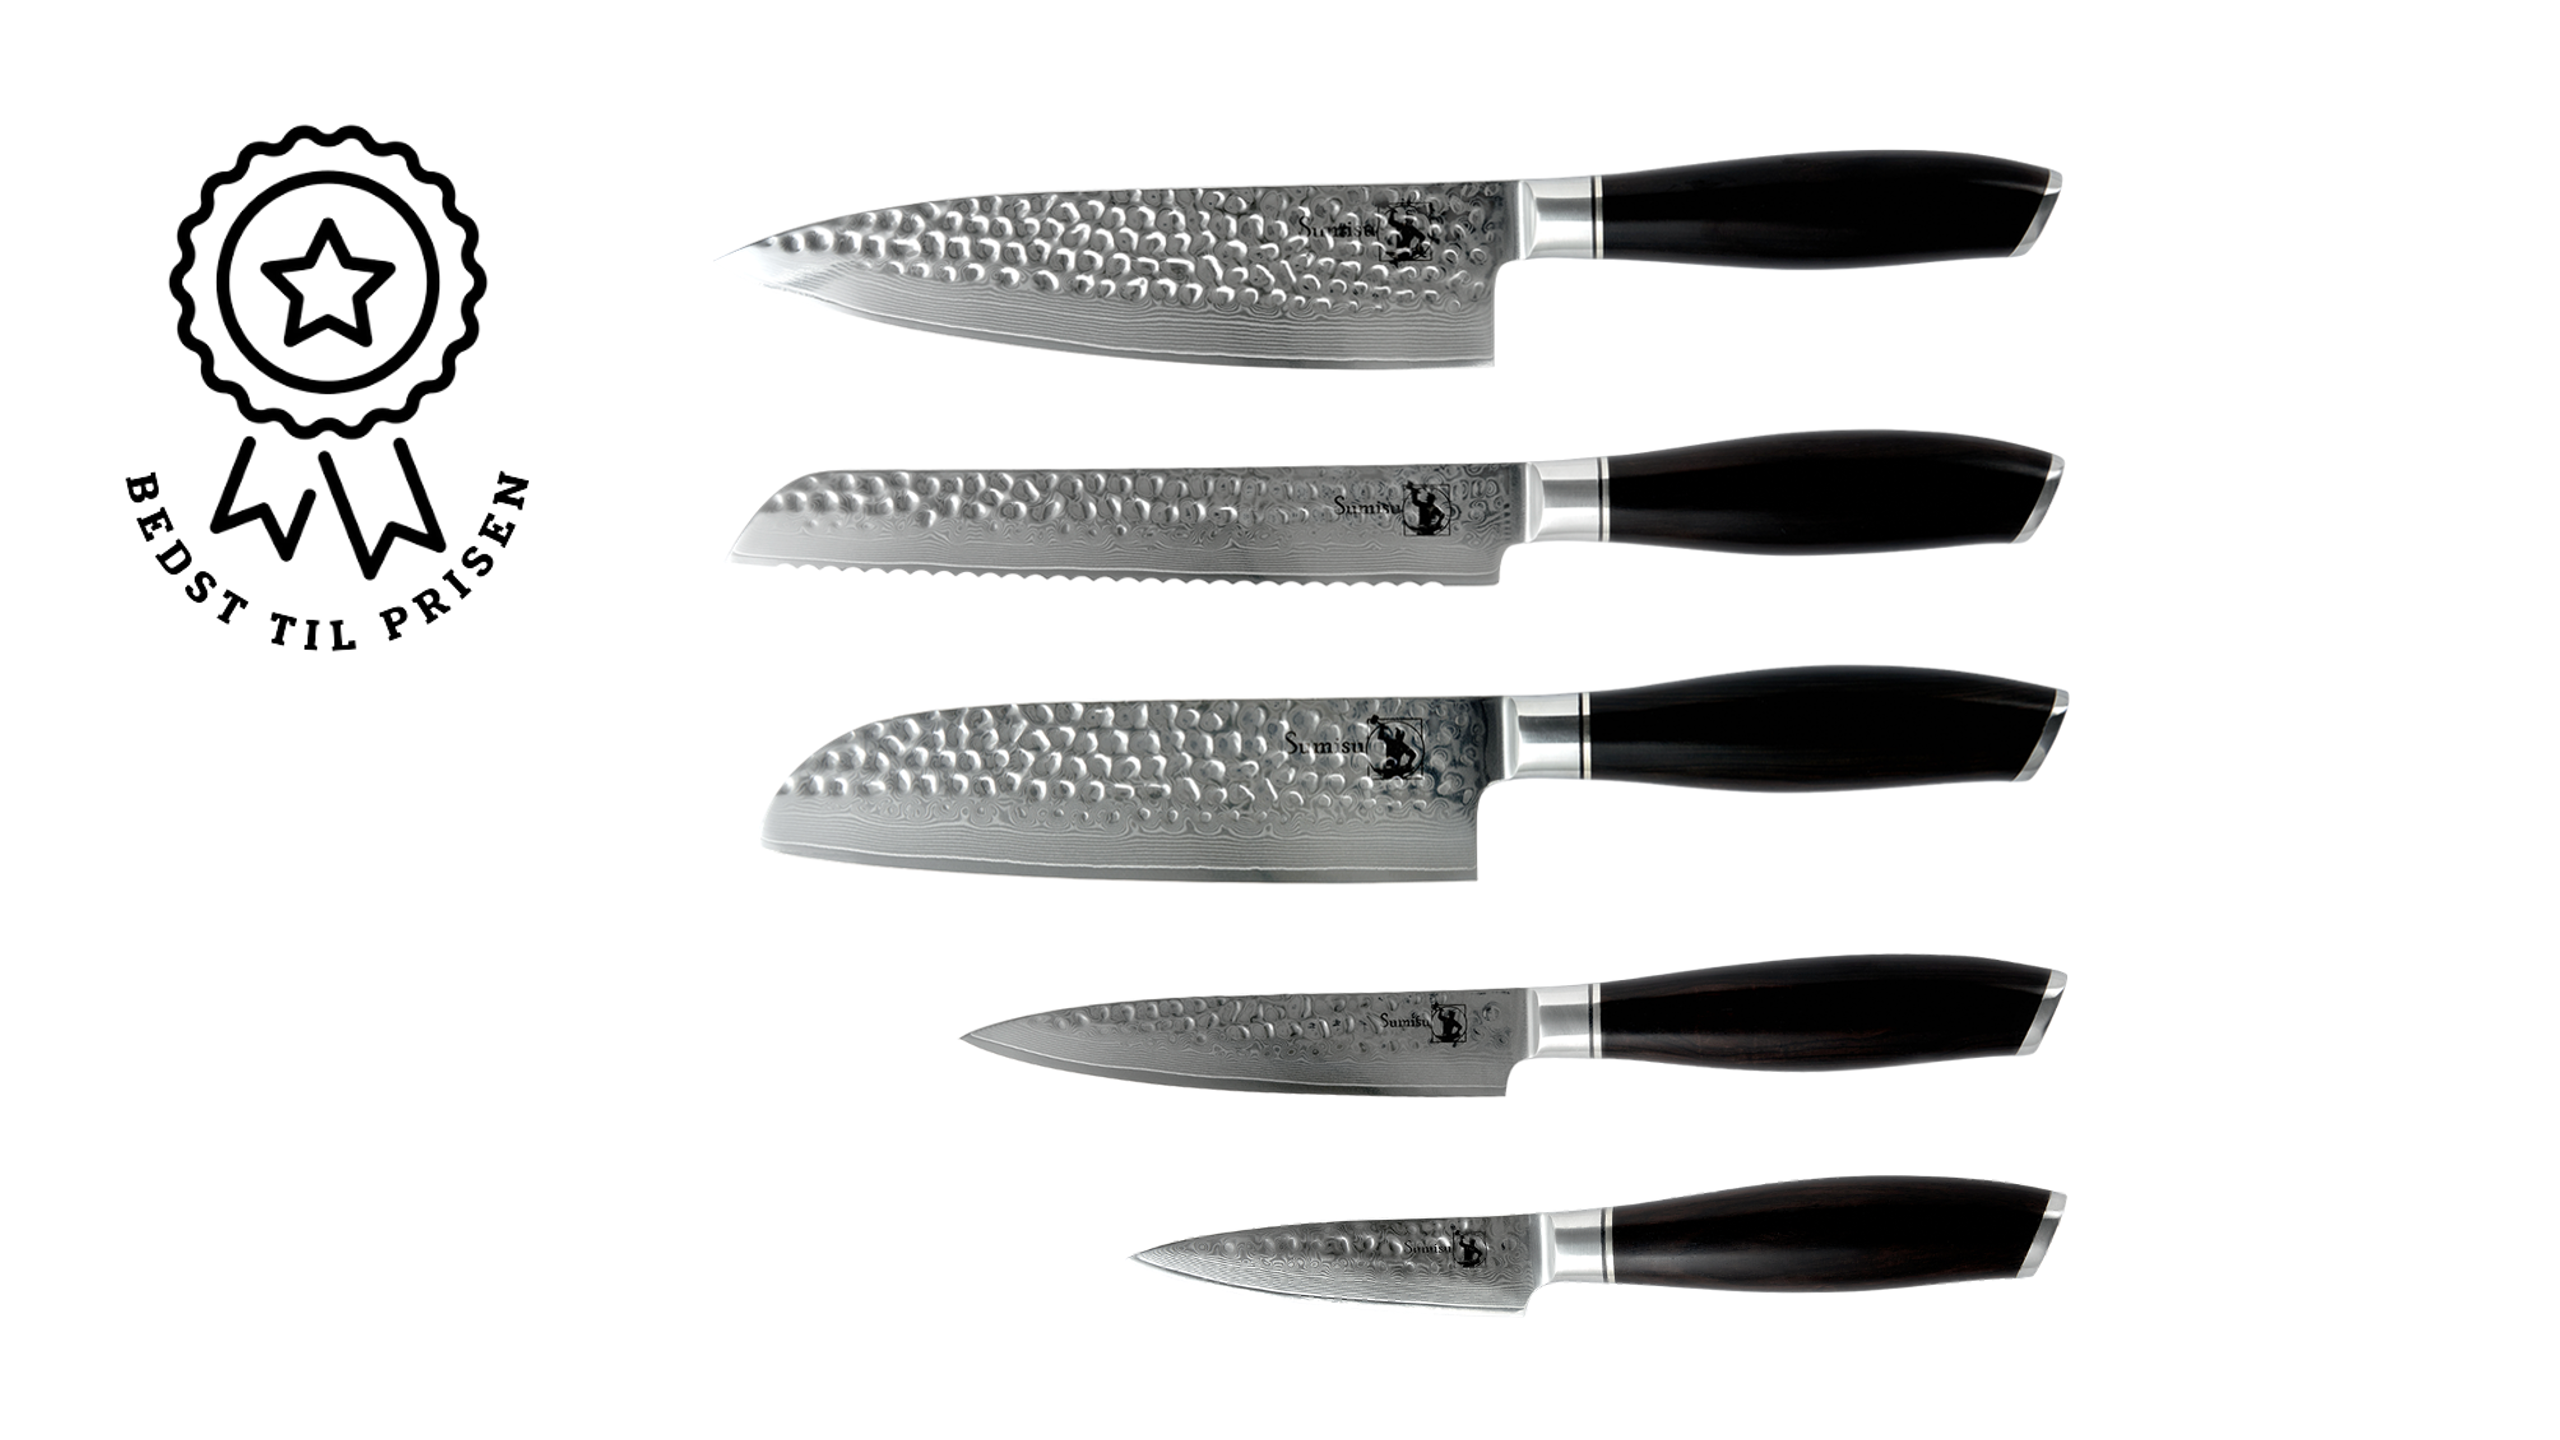 Billede af Sumisu - Kaki knivsæt med 5 køkkenknive - Madentusiasten - 67 Lags Damaskusstål - Damskusstål, rustfri stål, sort, blank